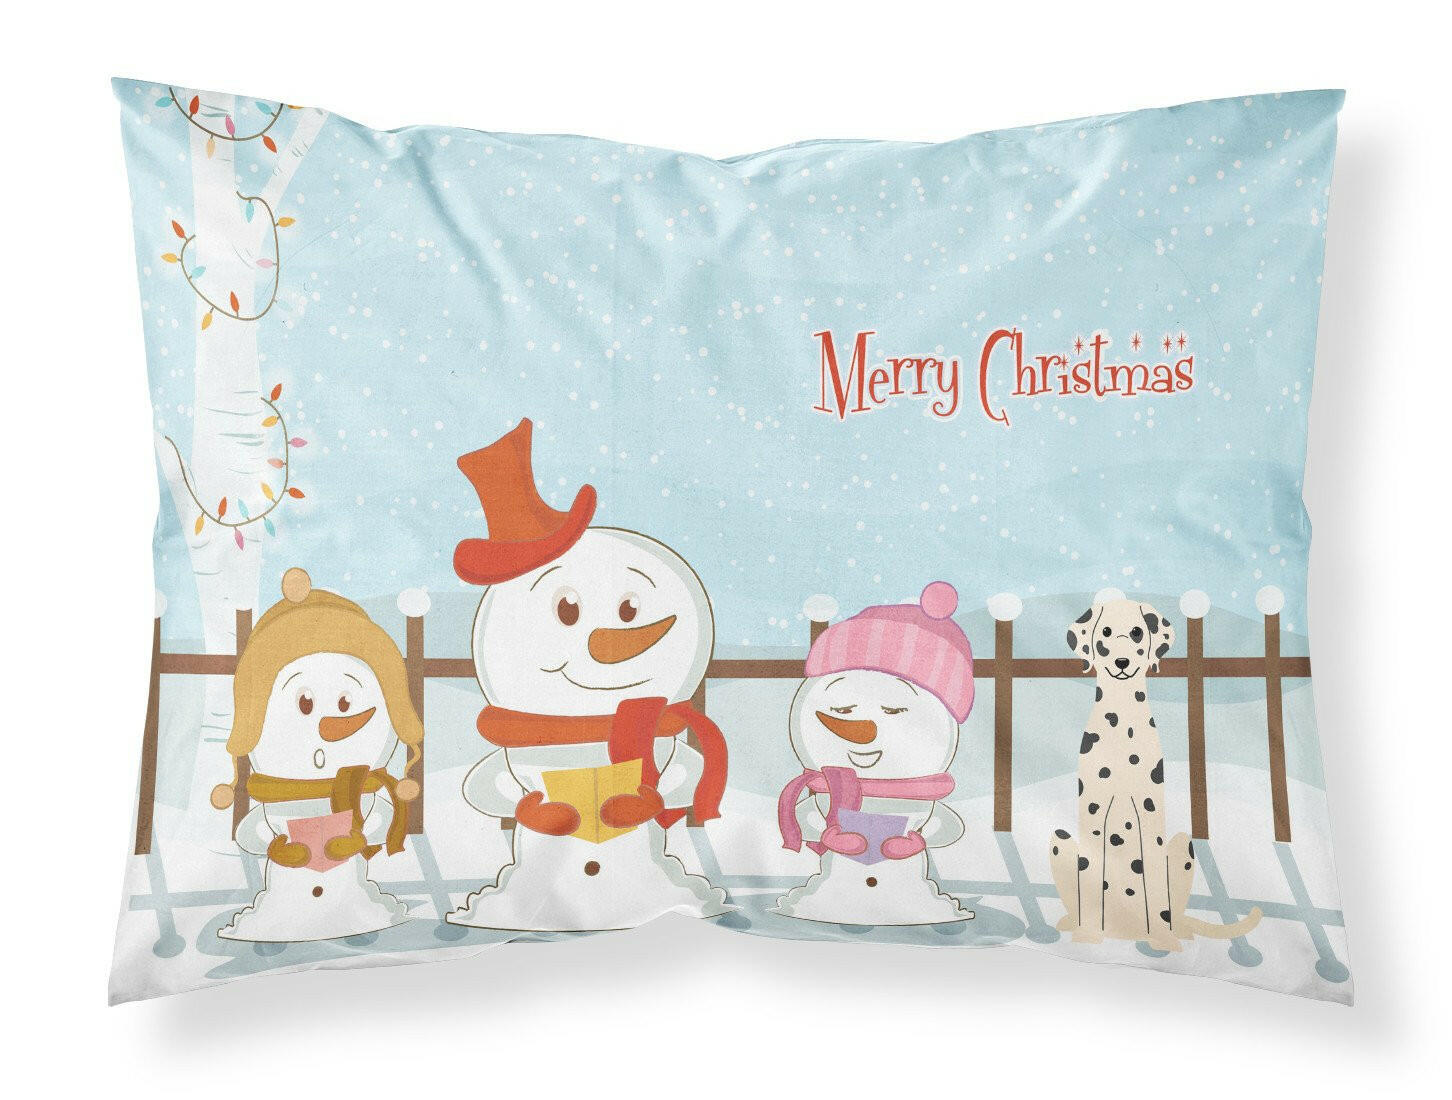 Merry Christmas Carolers Dalmatian Fabric Standard Pillowcase BB2428PILLOWCASE by Caroline's Treasures